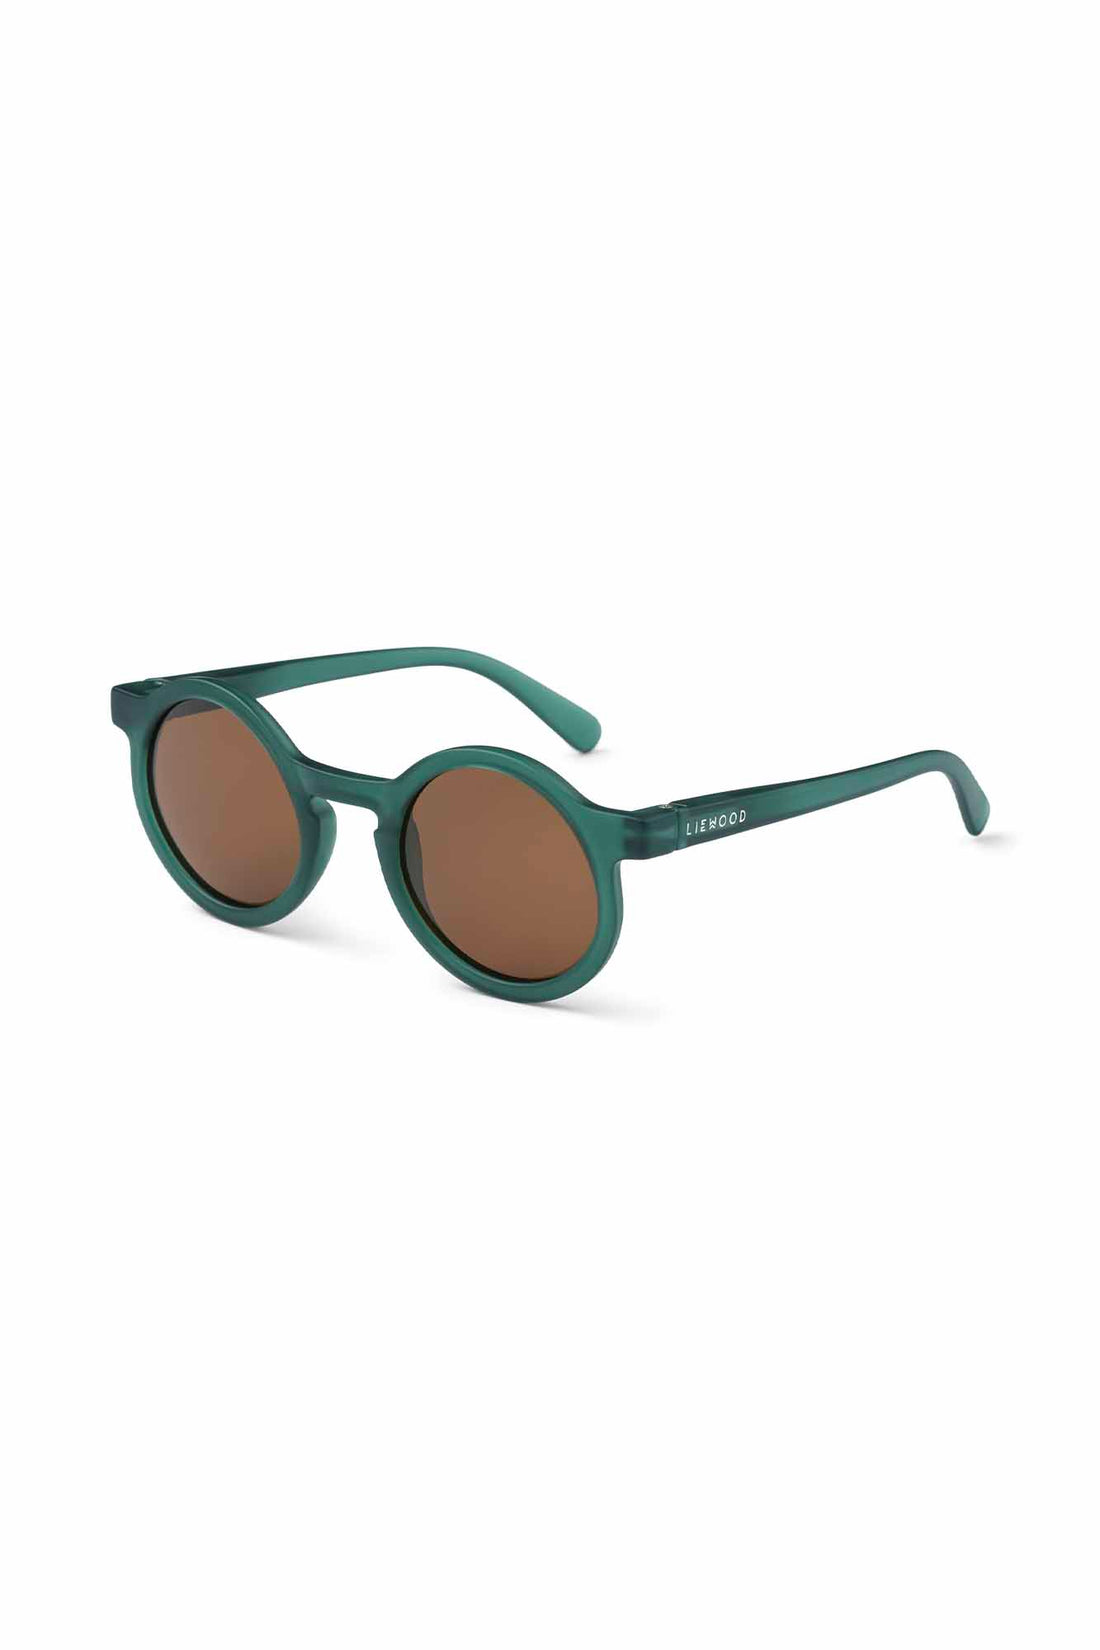 Liewood Darla Sunglasses Garden Green (4-10Y)